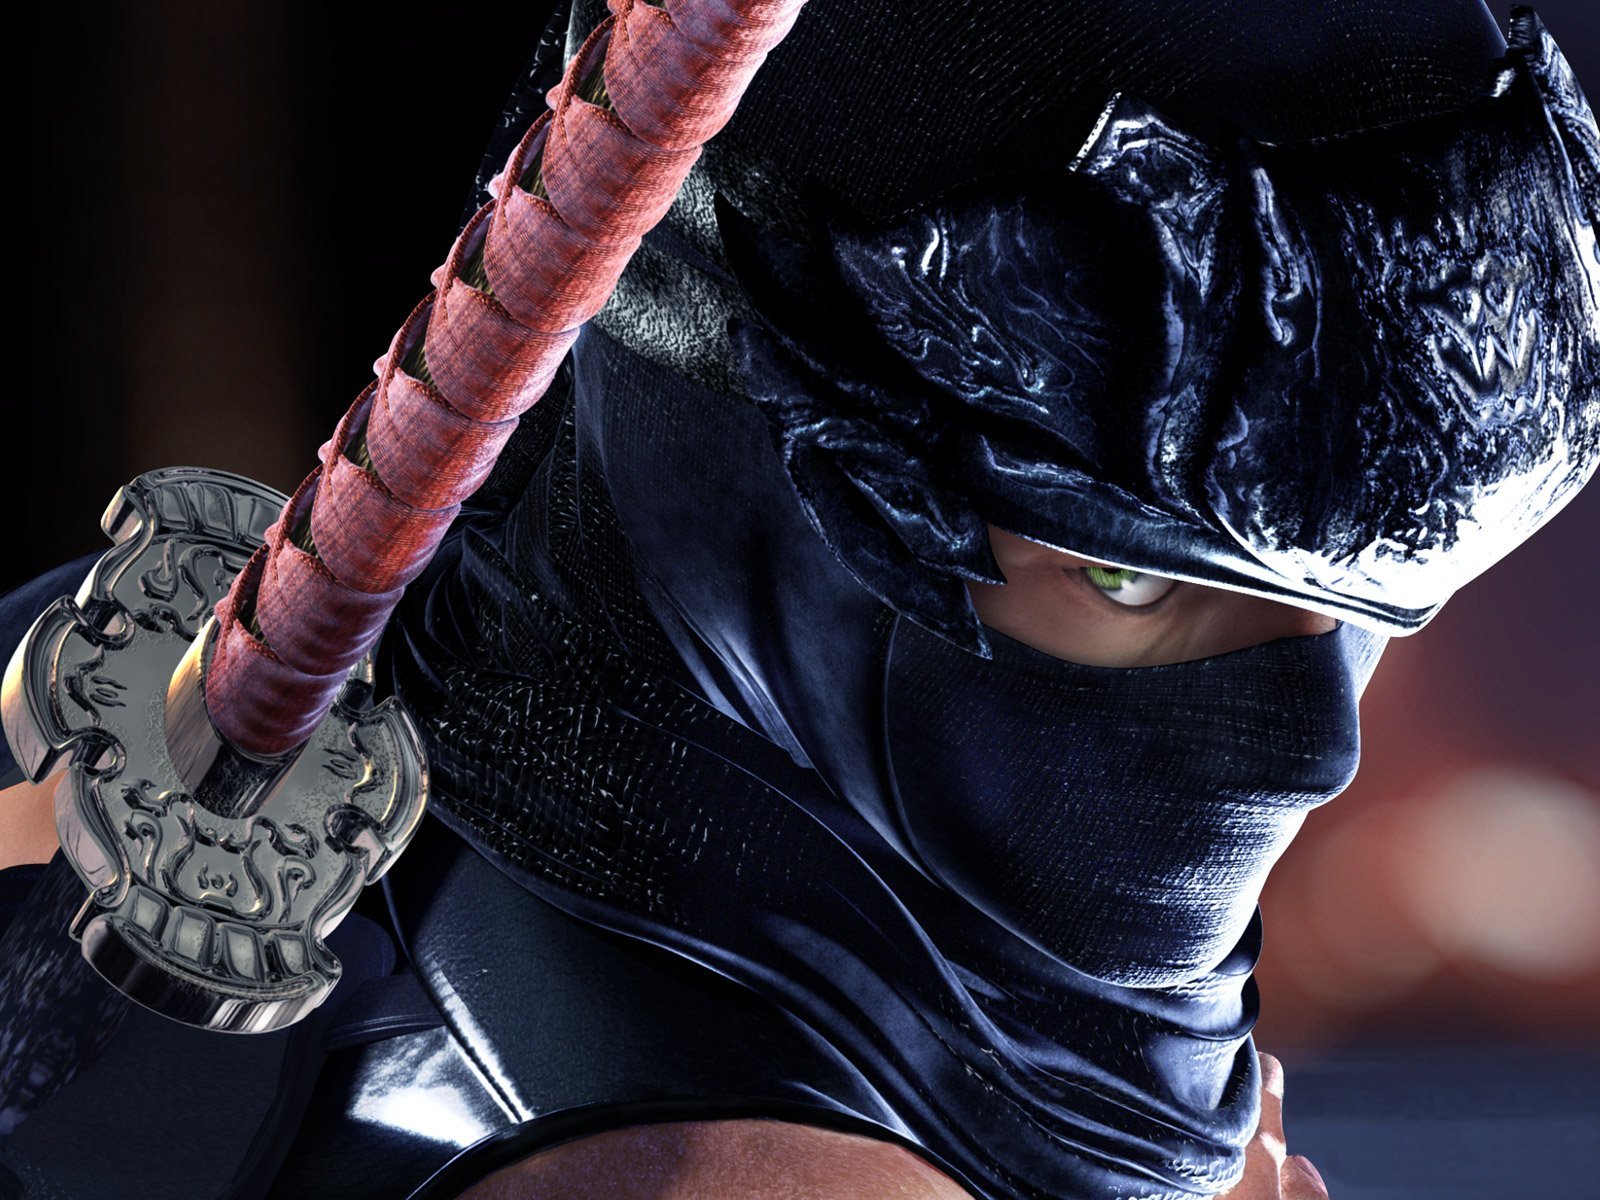 Ninja Gaiden Fantasy Anime Warrior Weapon Sword G Wallpaper Background